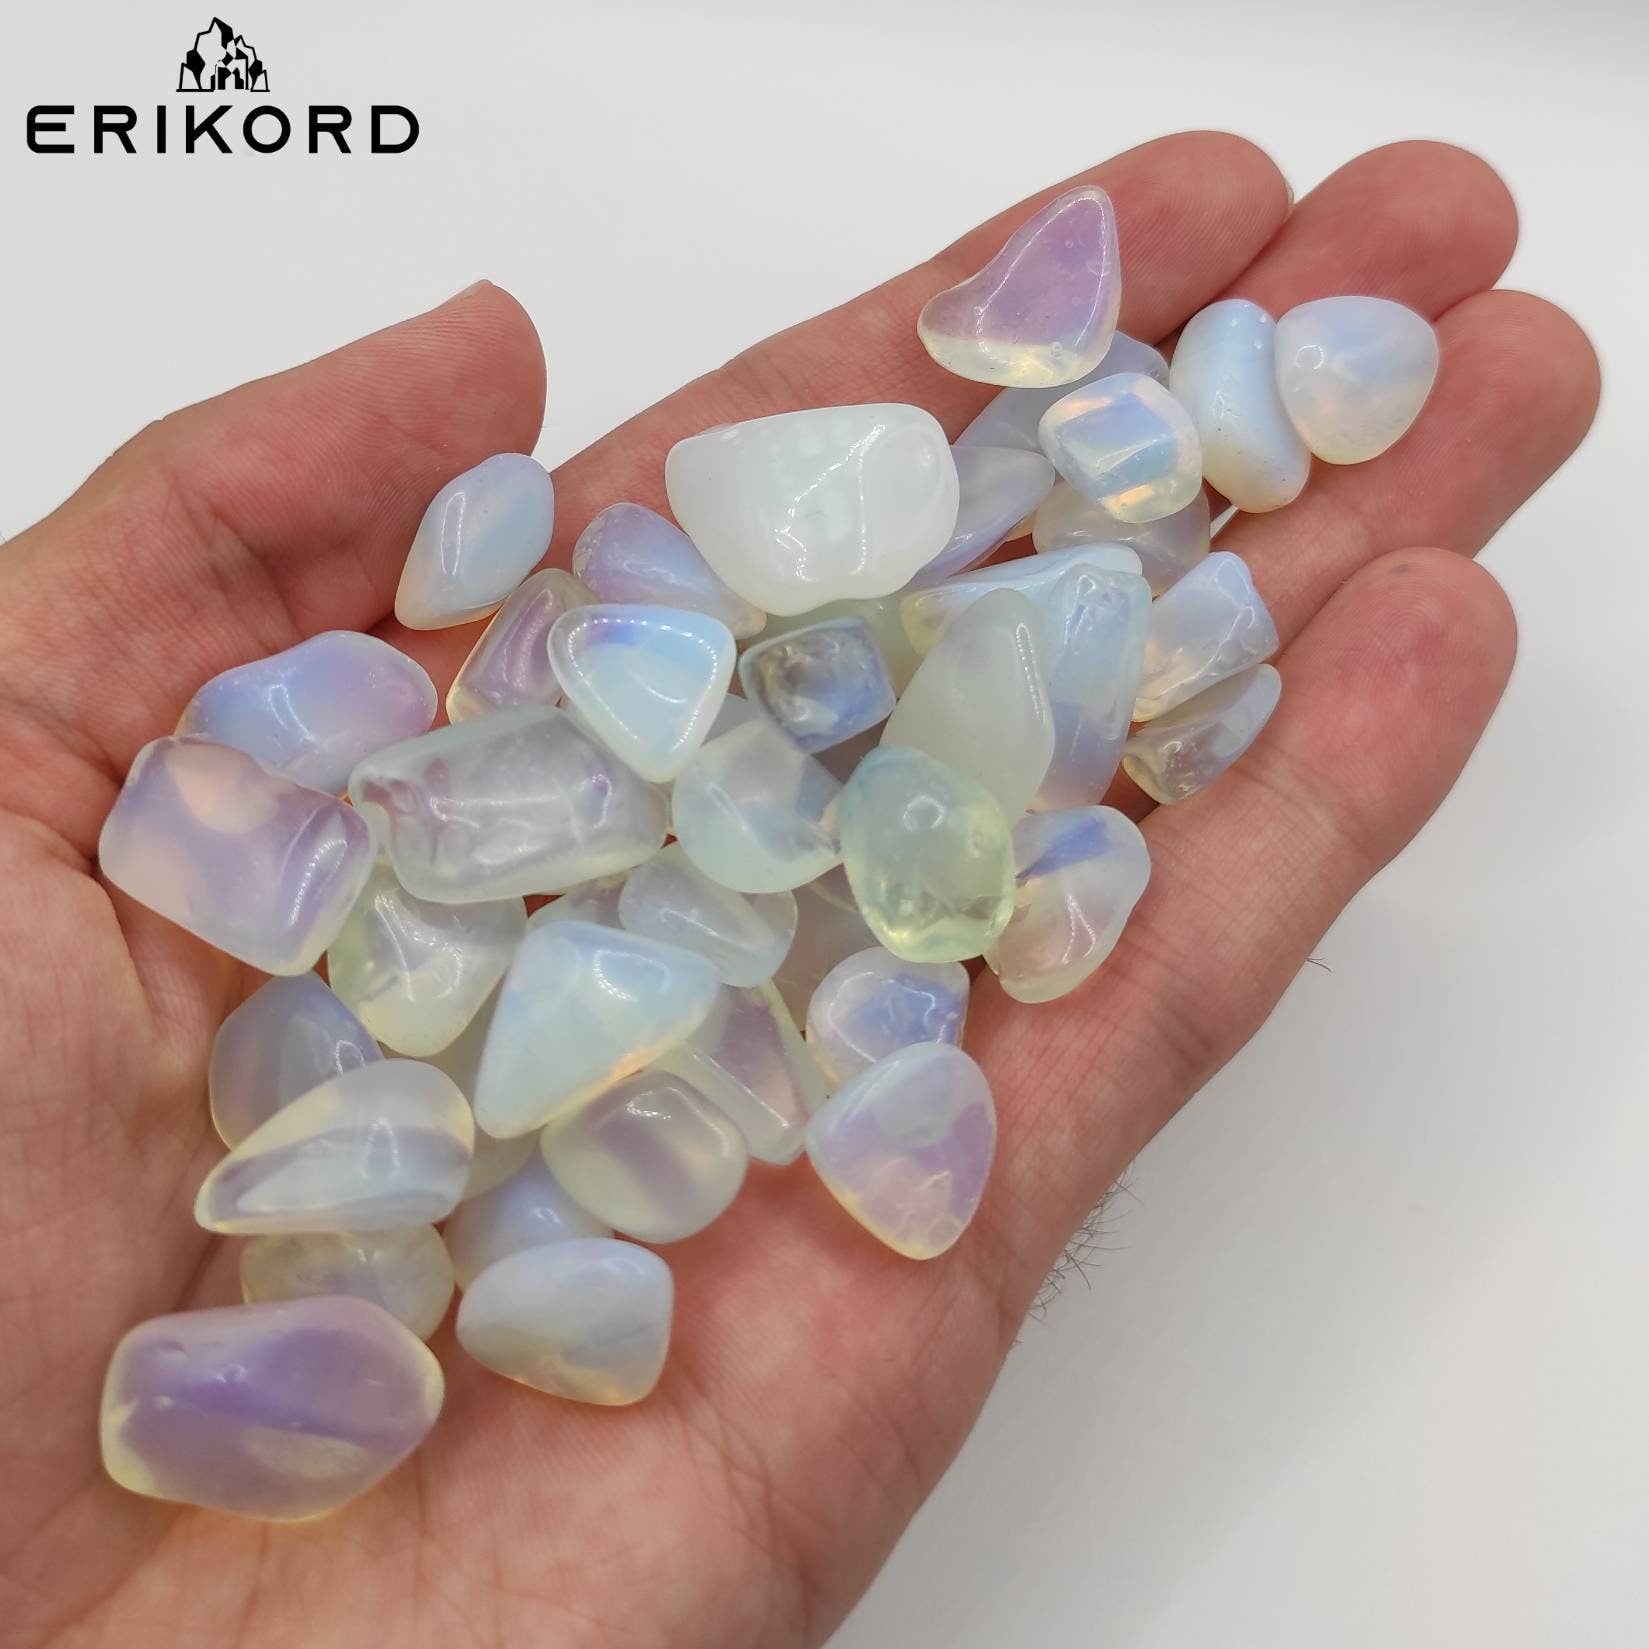 50/100/200g Opalite Gravel Synthetic Opal 8-20mm Tumbled Gravel Polished Gravel Imitation Opal Moonstone Polished Gems White Crystals